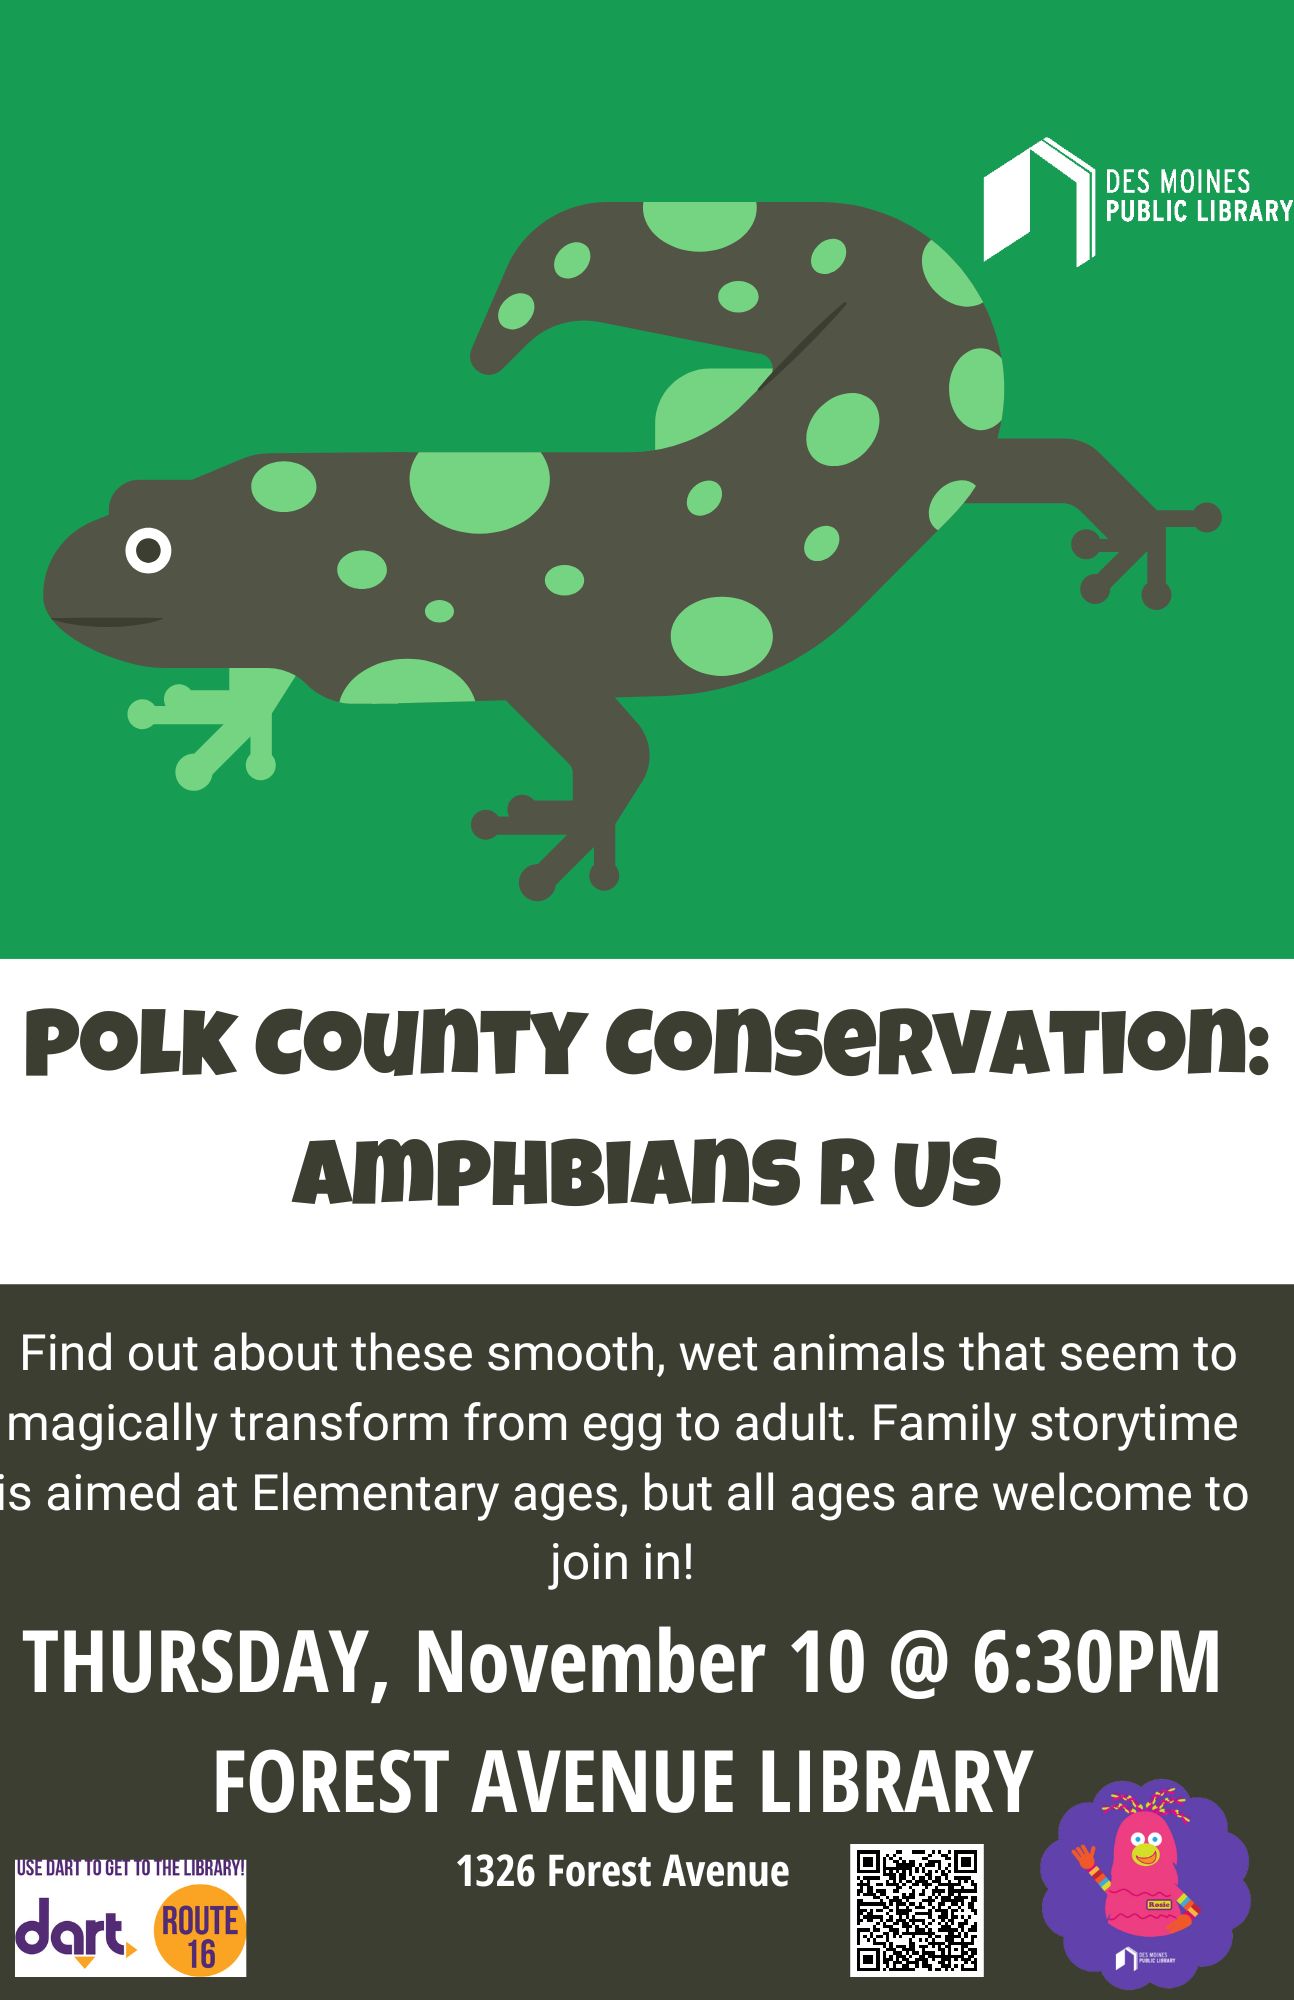 Polk County Conservation storytime